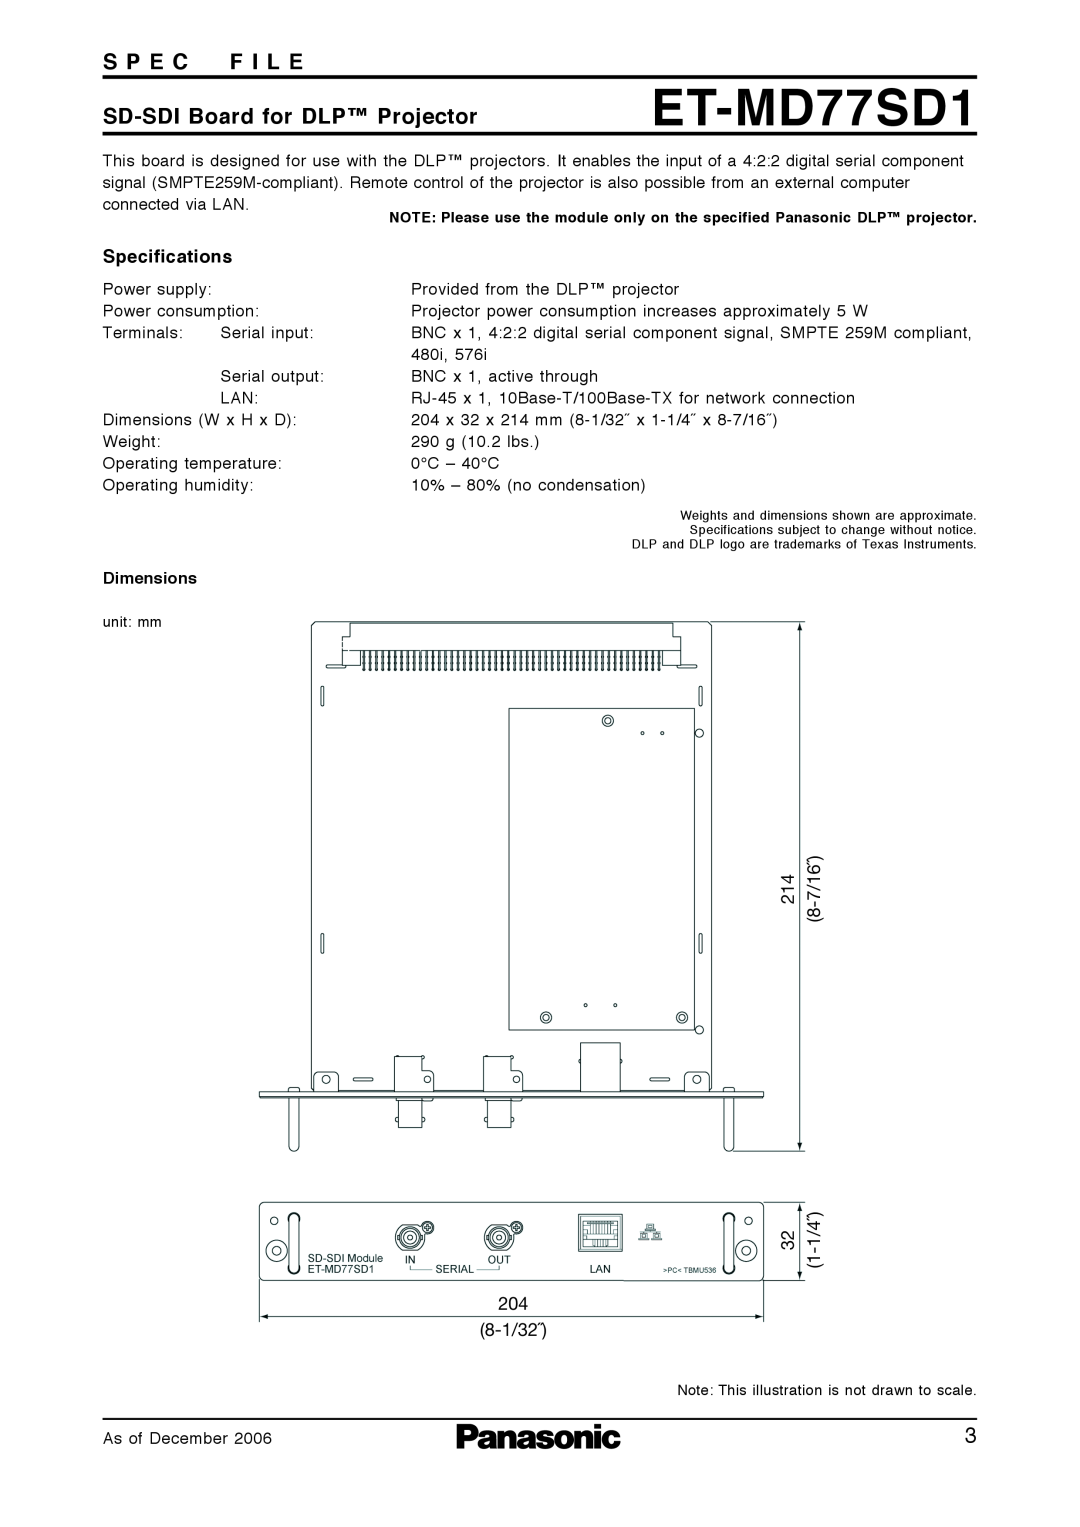 Panasonic ET-MD77NT ET-MD77SD1, SD-SDI Board for DLP Projector, S P E C F I L E, Specifications, 7/16˝, 1/4˝, 204 8-1/32˝ 